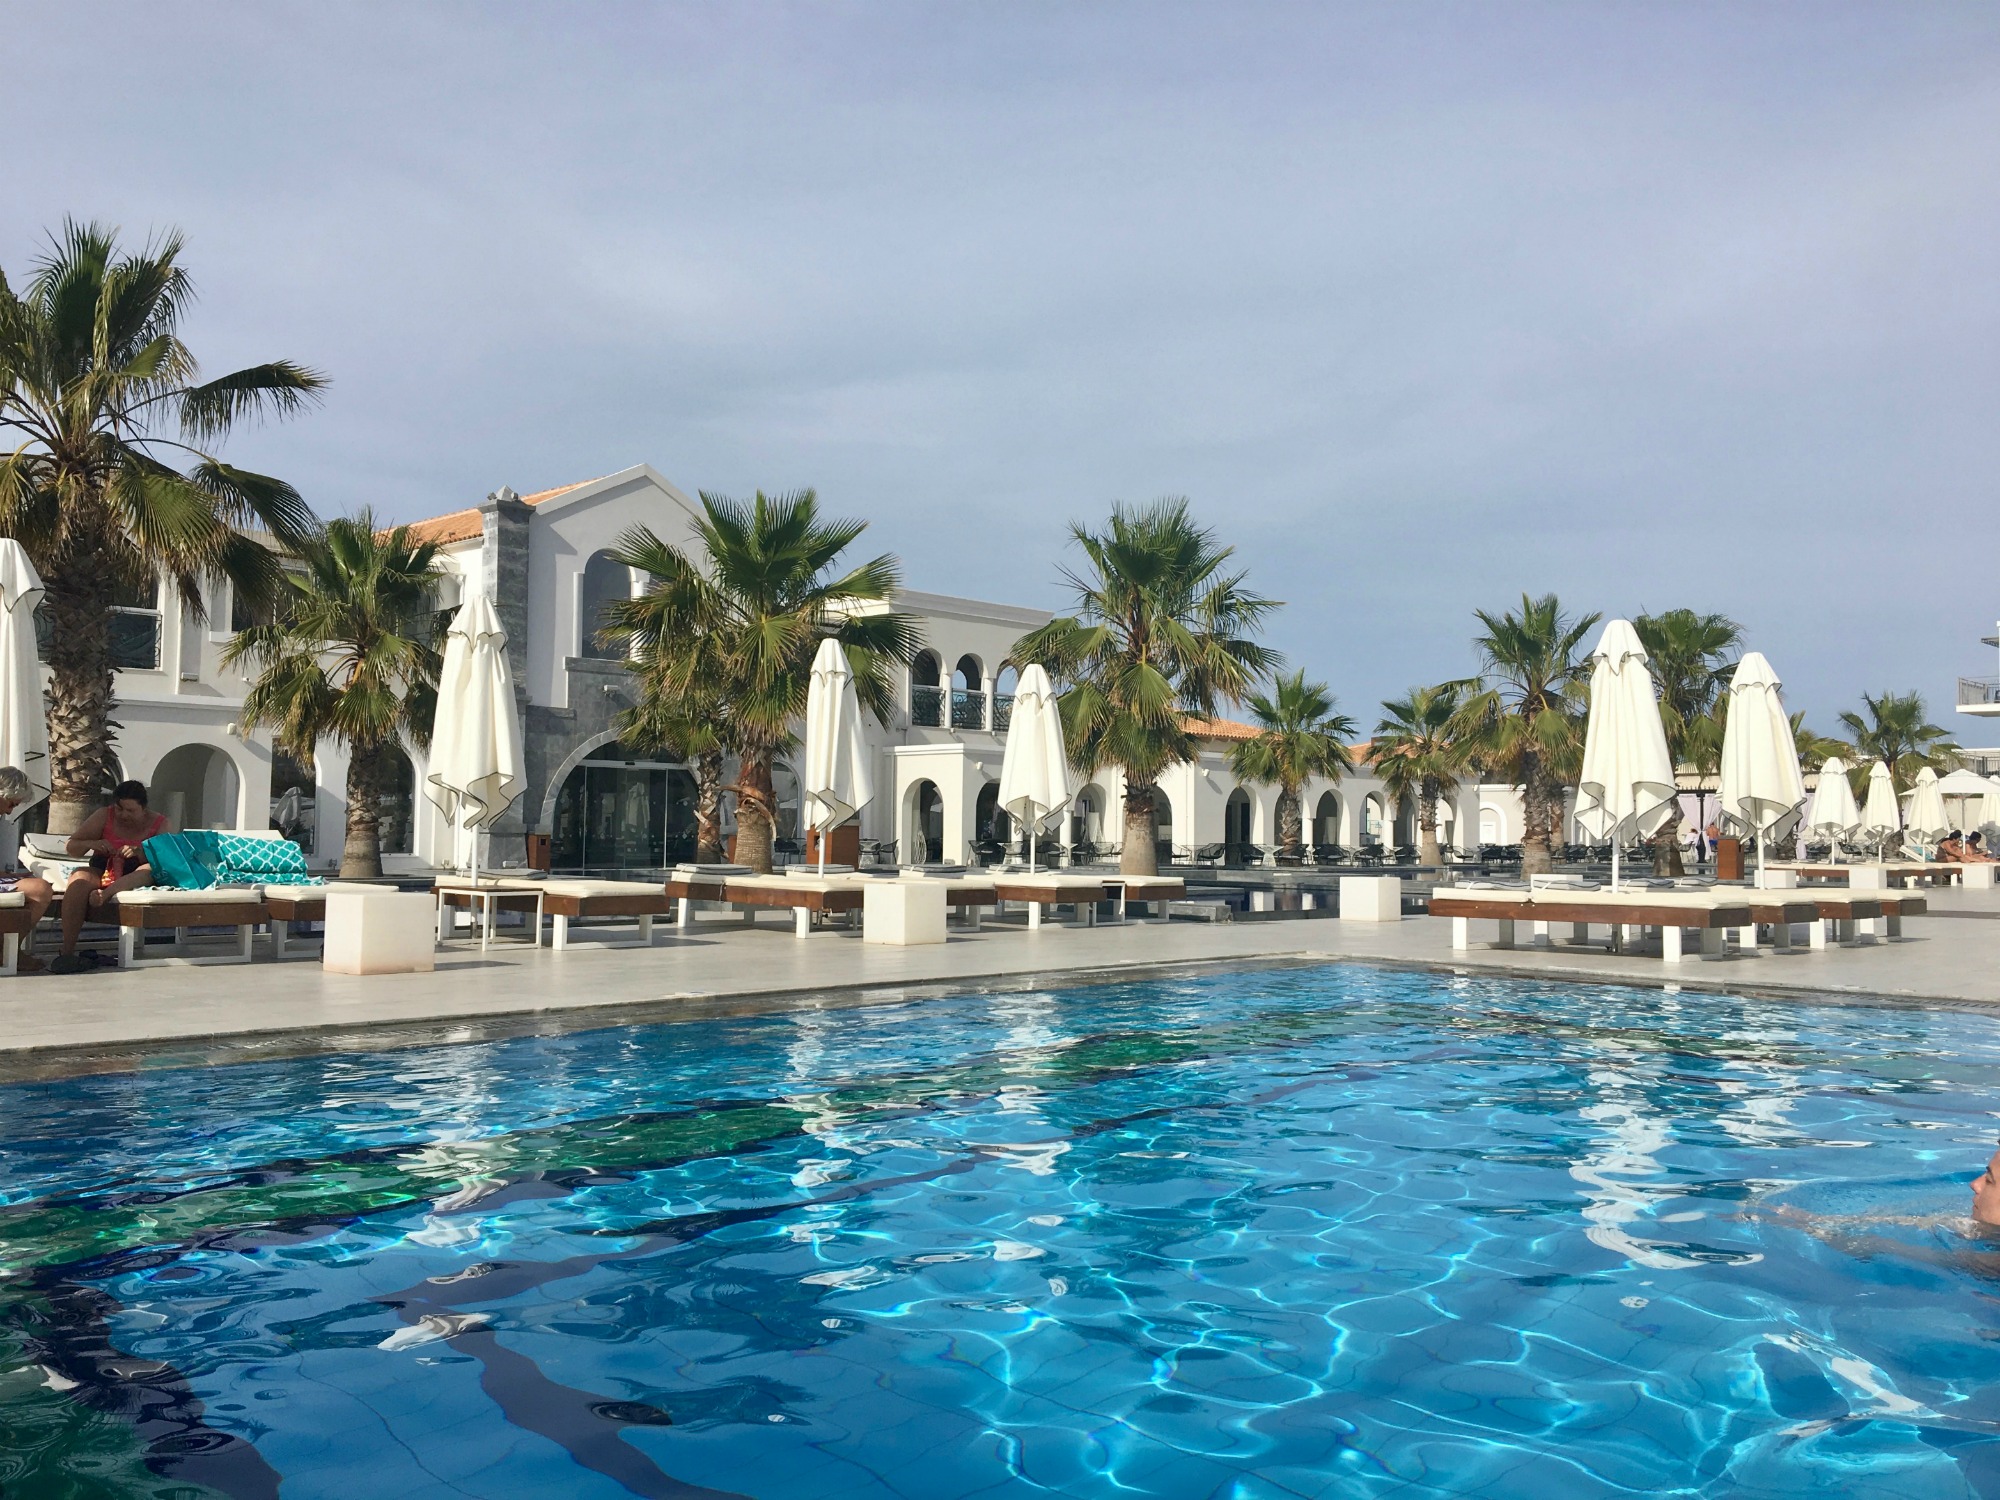 Anemos Grand Luxury Hotel, Crete, swimming pool